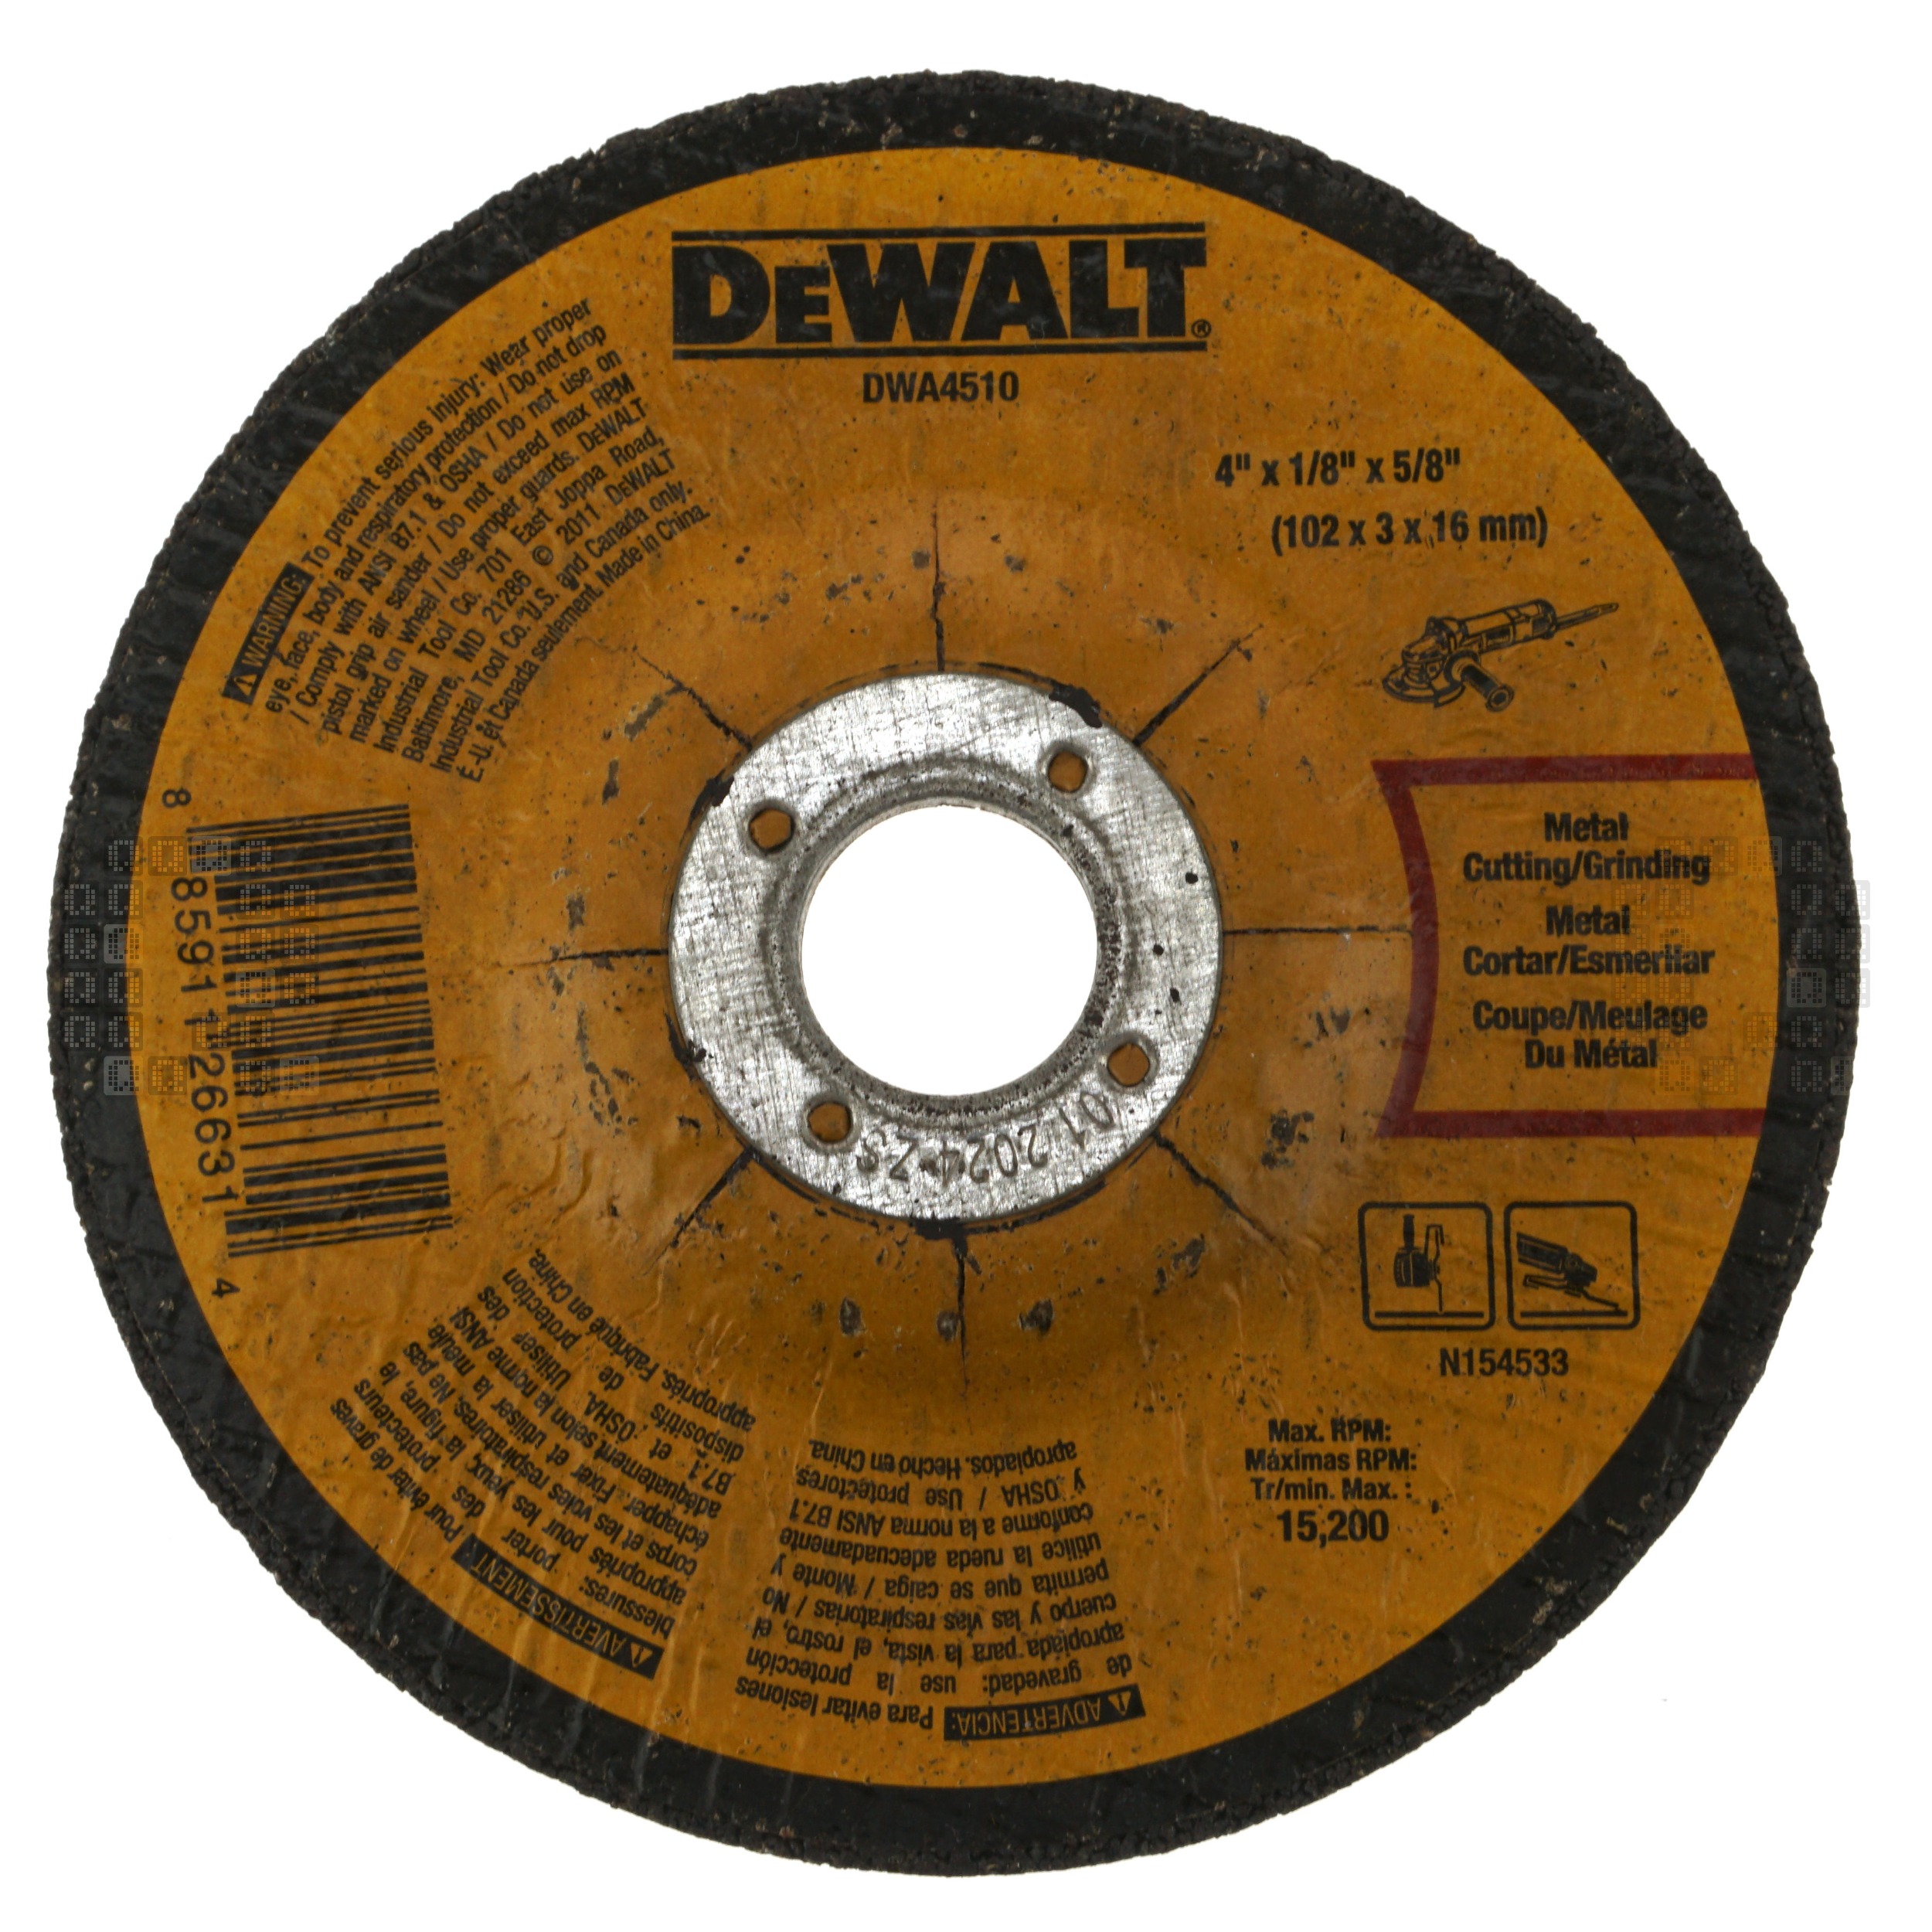 DeWALT DWA4510 4" Diameter Aluminum Oxide Abrasive Grinding Wheel, 1/8" Thickness